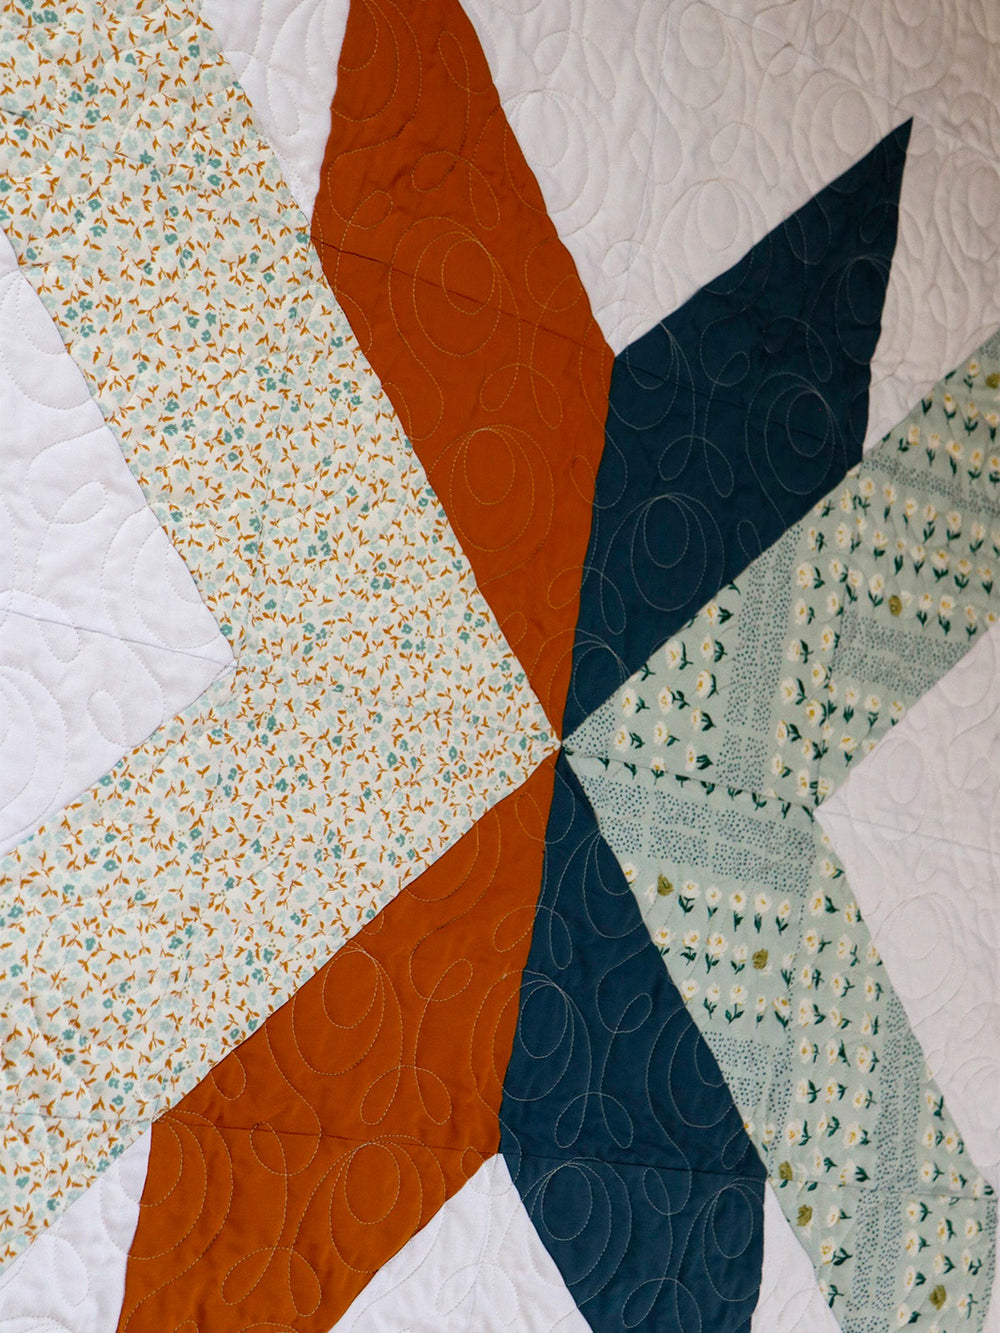 Modern Handmade Baby Quilt - Floral X Pattern #2 Earthly Comfort Home Decor ECH1577-1